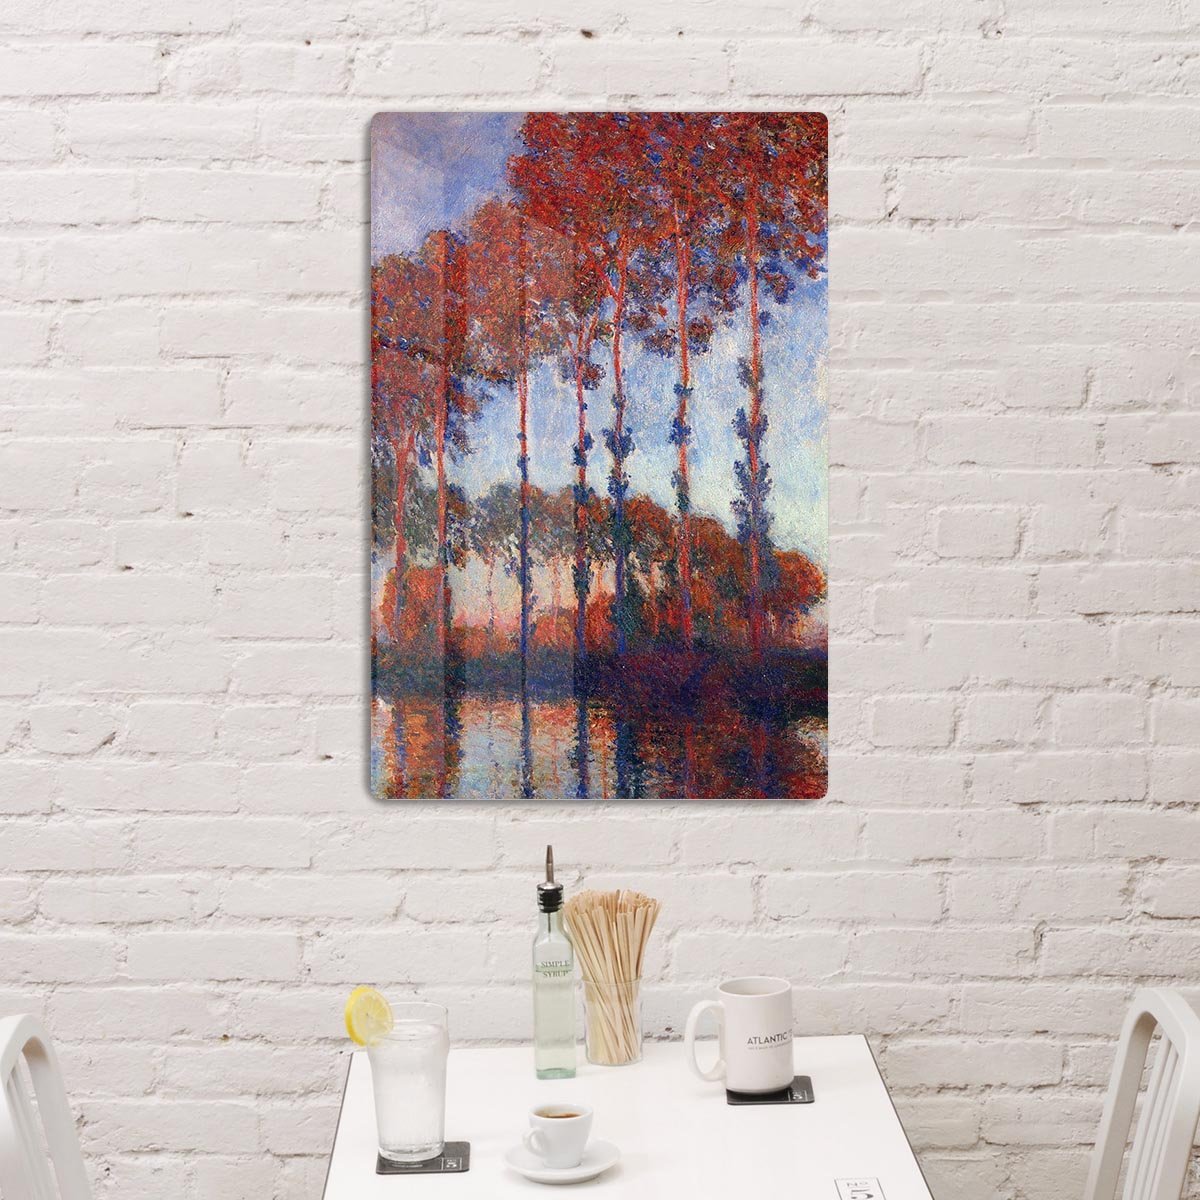 Poplars by Monet HD Metal Print